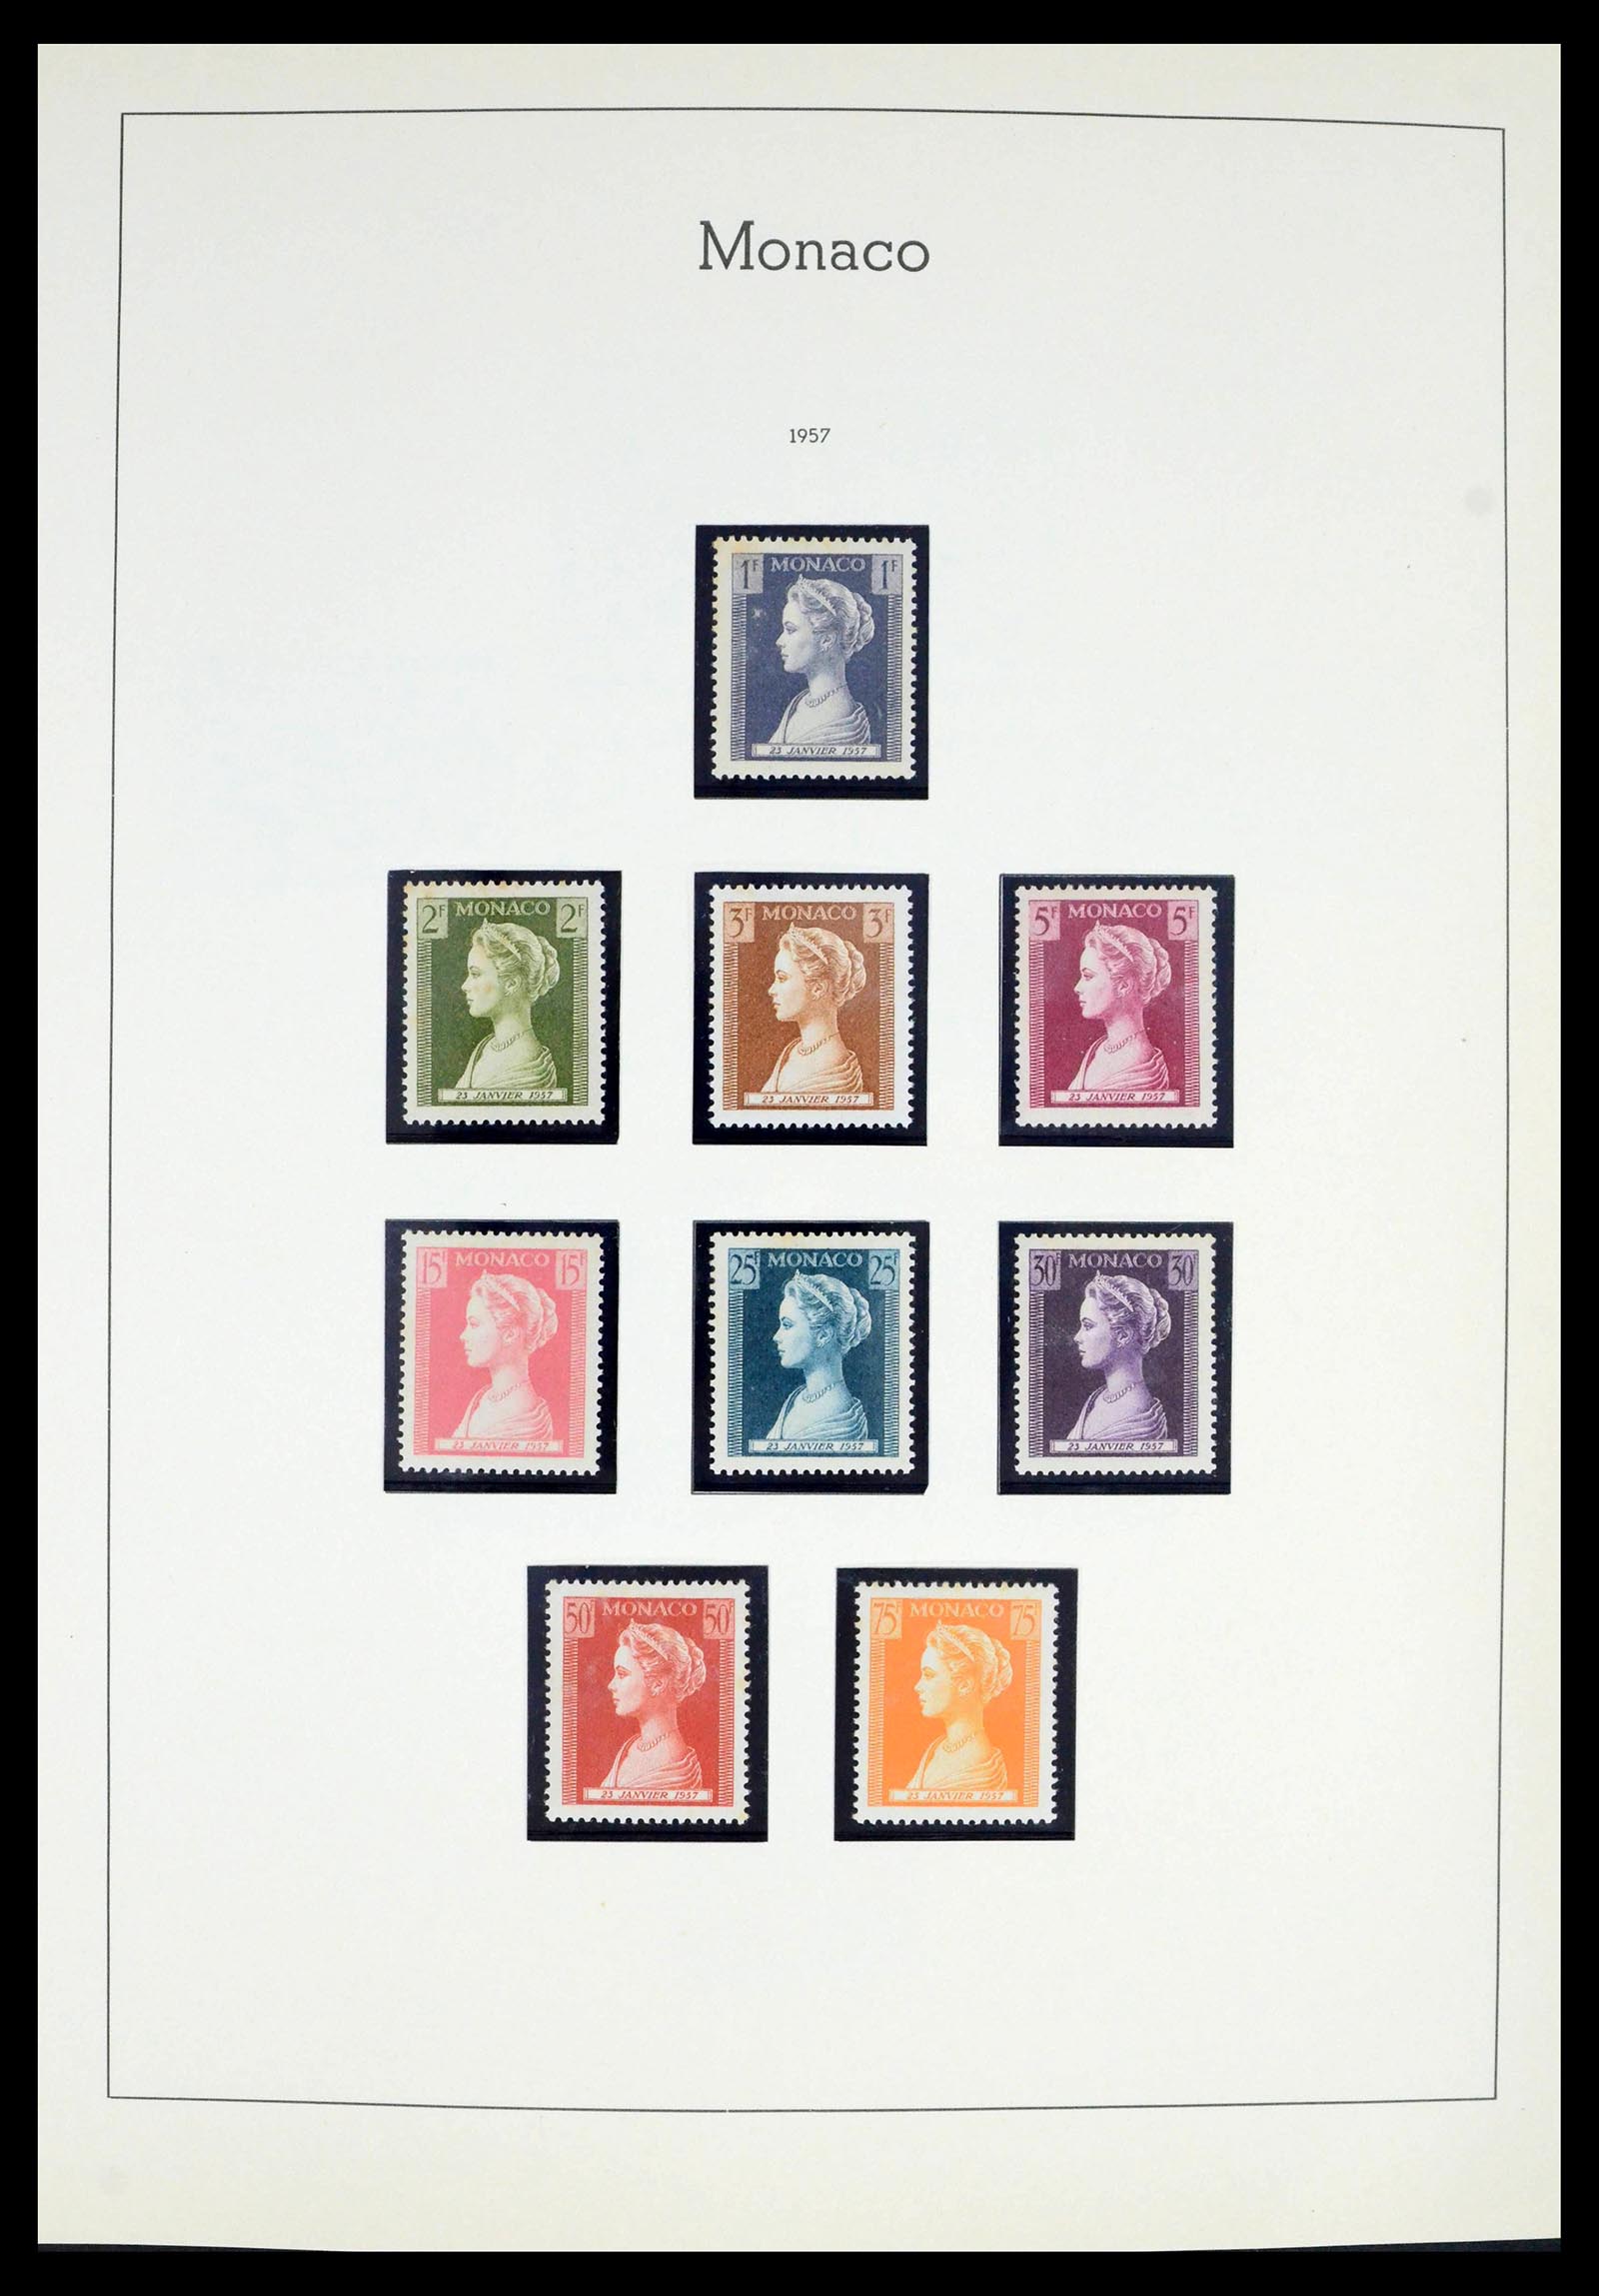 39392 0058 - Stamp collection 39392 Monaco 1885-1999.